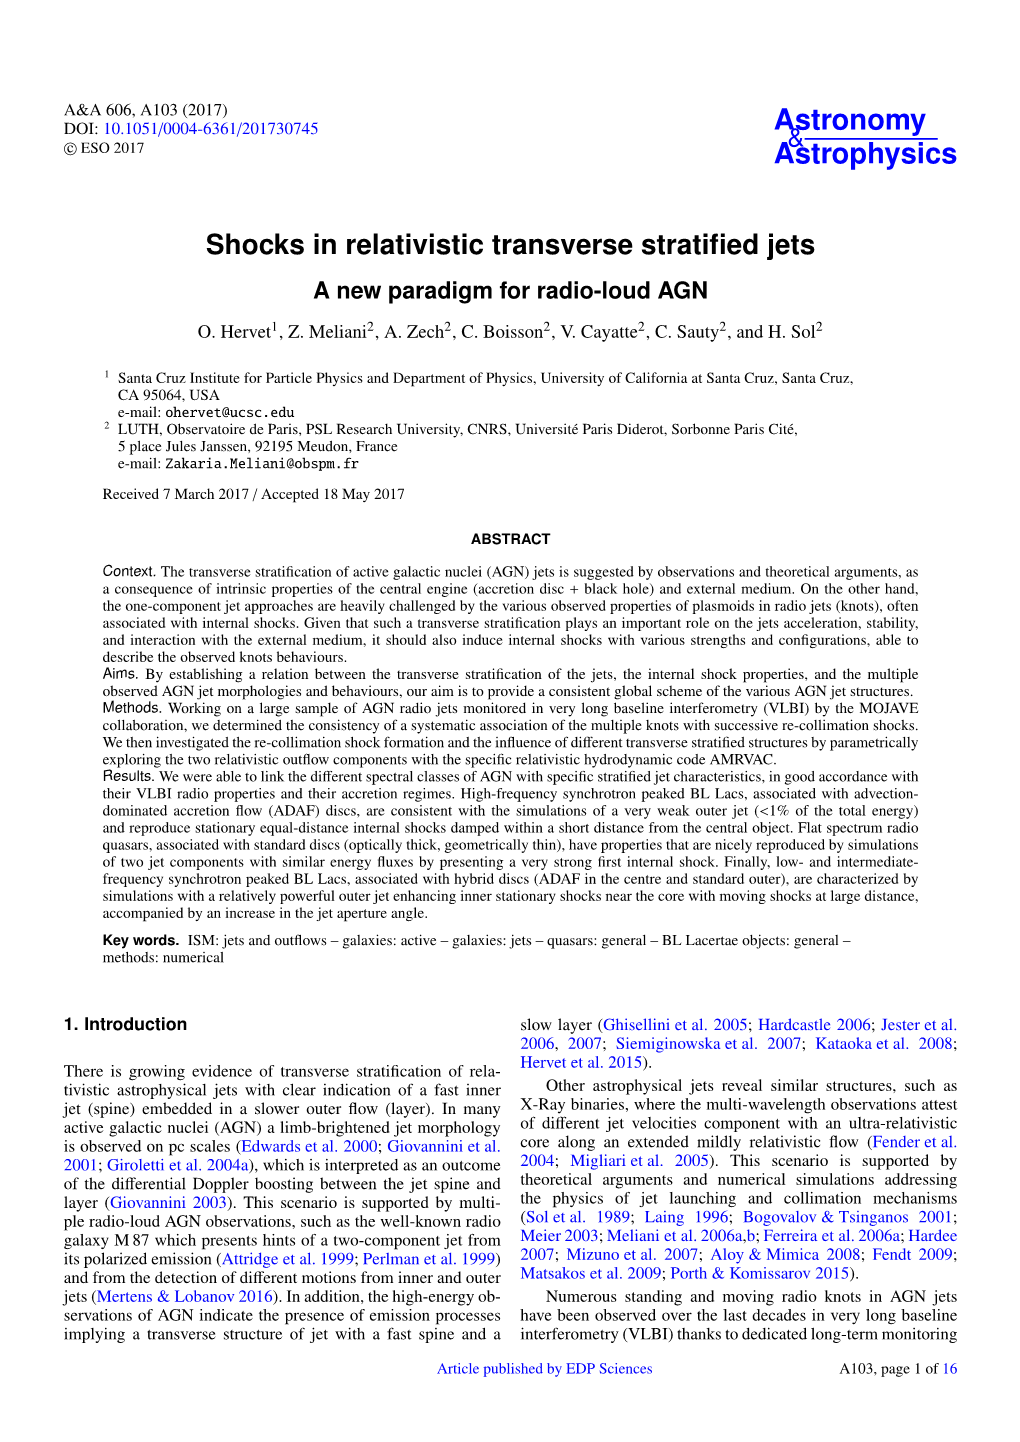 Shocks in Relativistic Transverse Stratified Jets